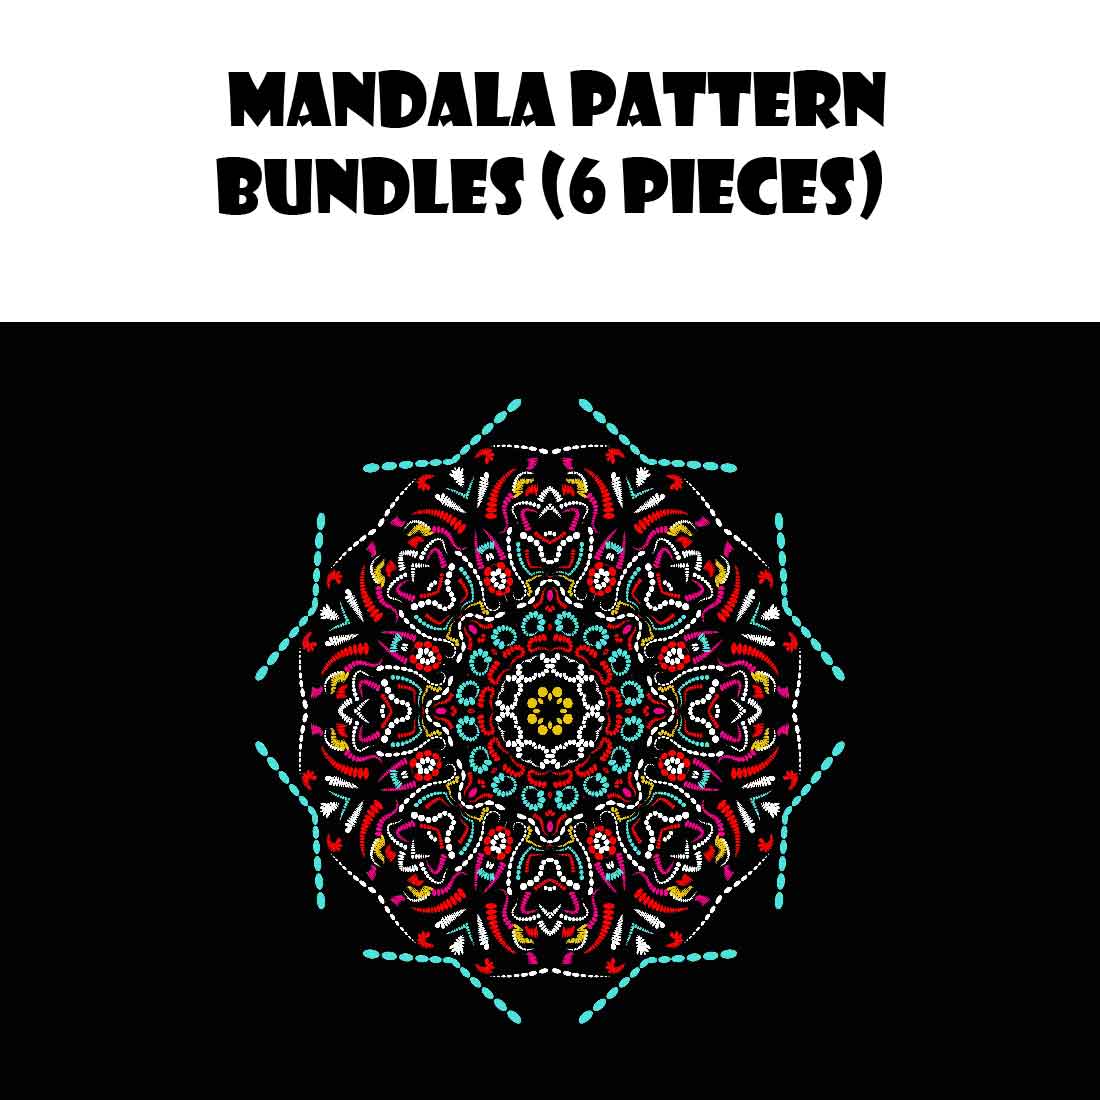 Mandala Art Bundles main cover.